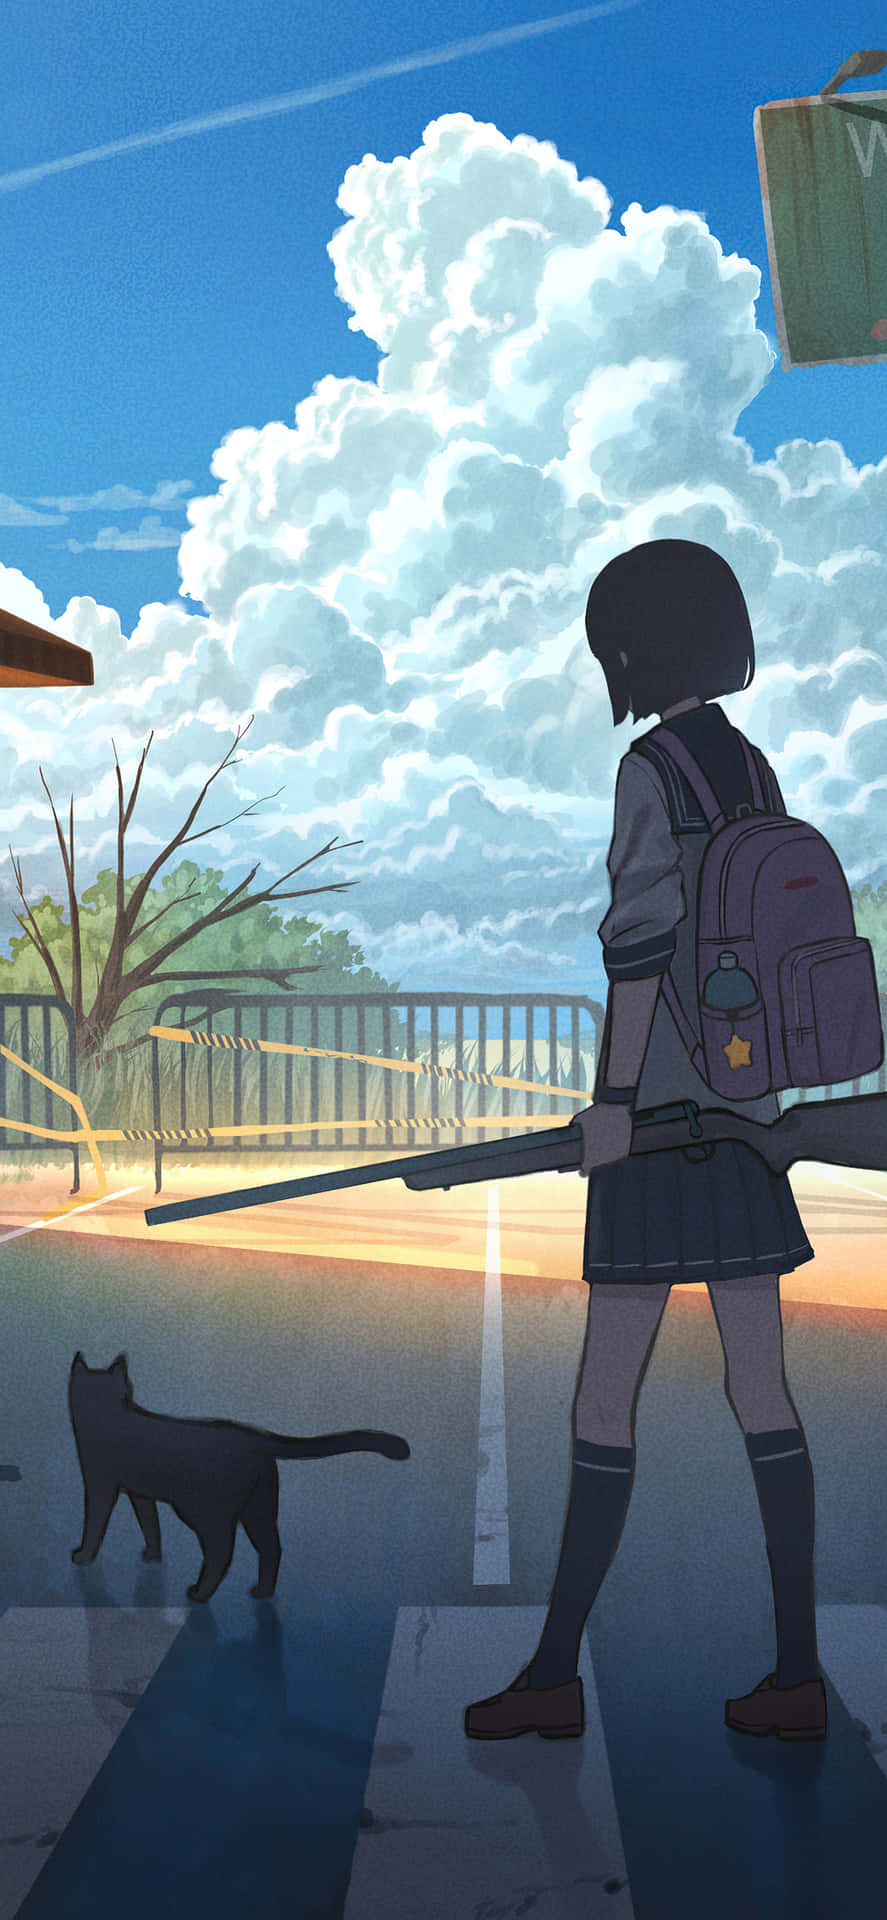 Morning School Commute Anime Style Wallpaper